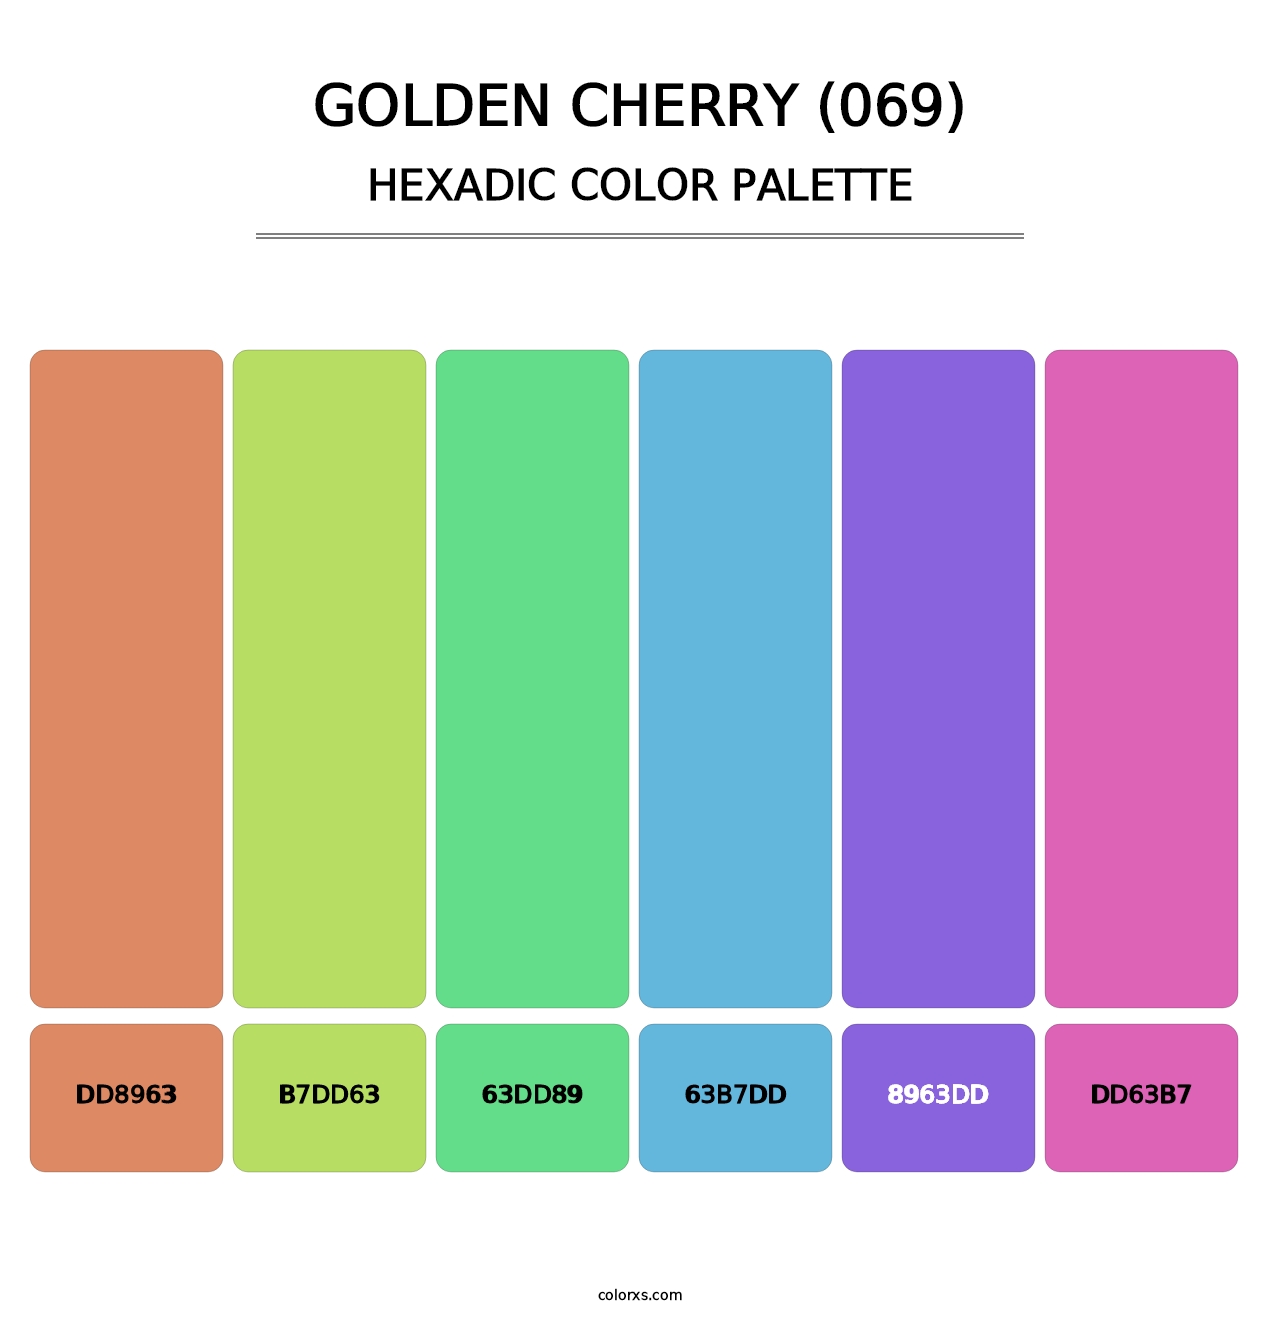 Golden Cherry (069) - Hexadic Color Palette